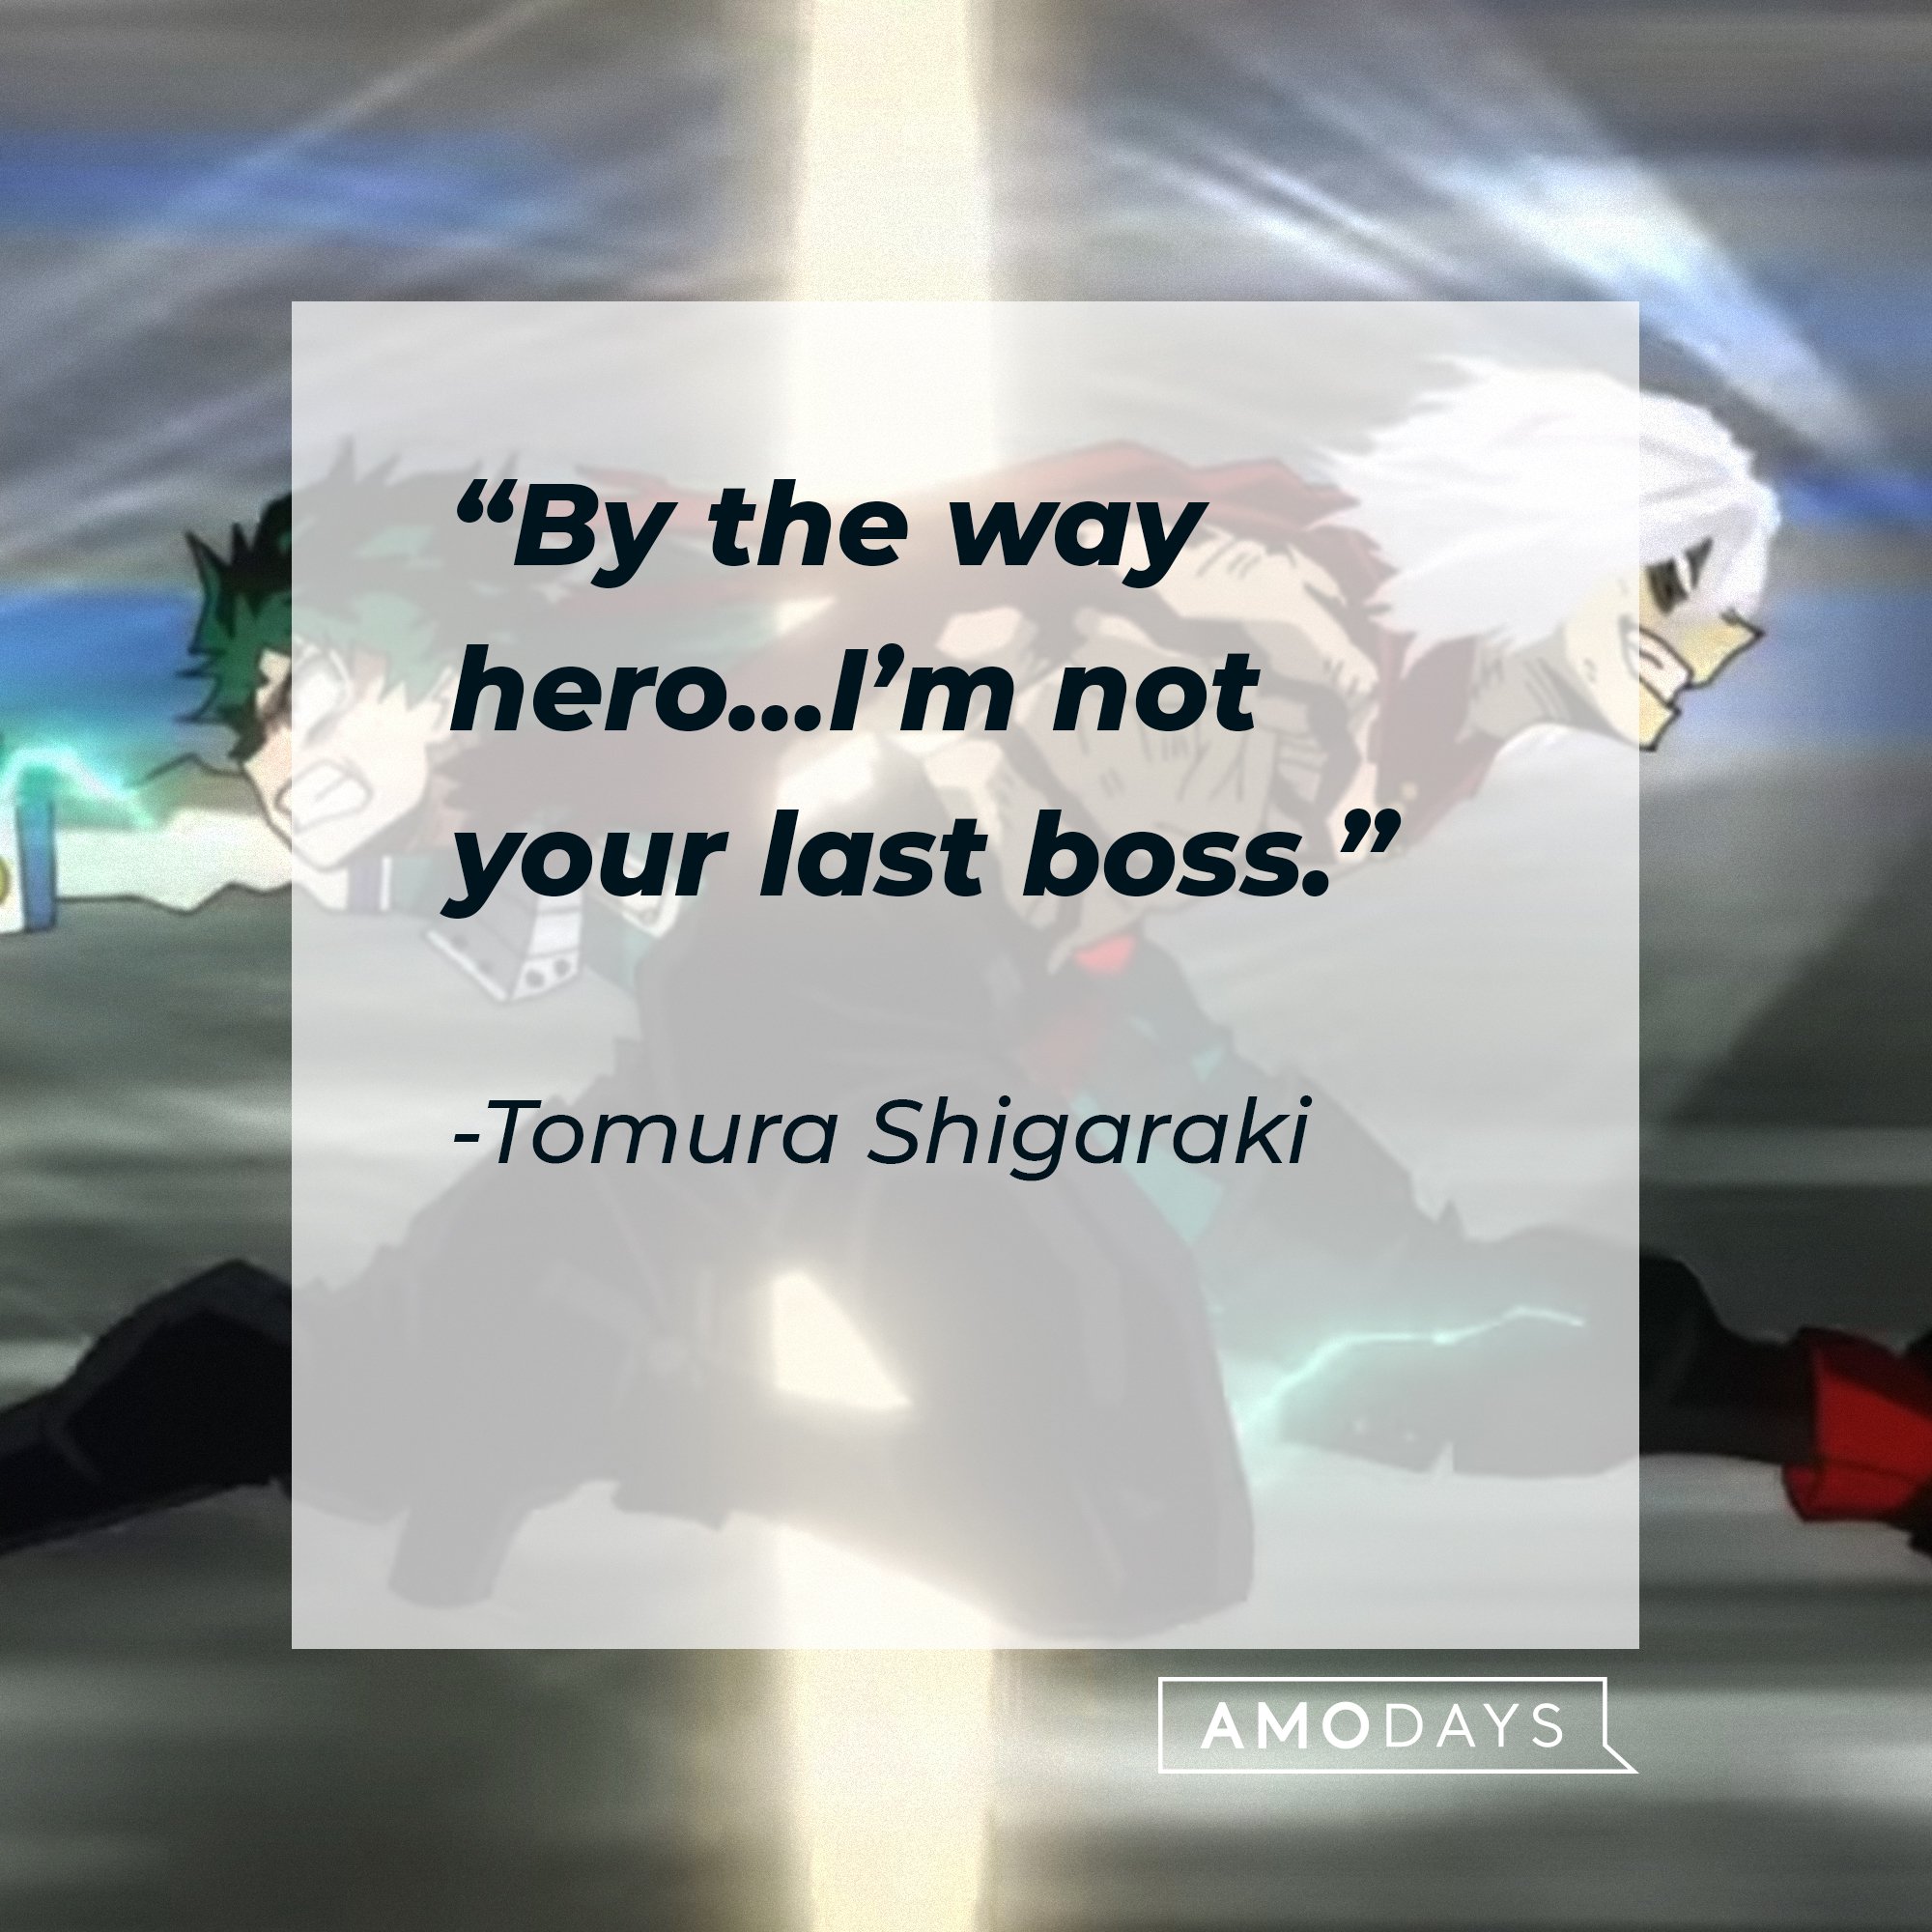 Tomura Shigaraki’s quote: “By the way hero… I'm not your last boss.” | Image: AmoDays